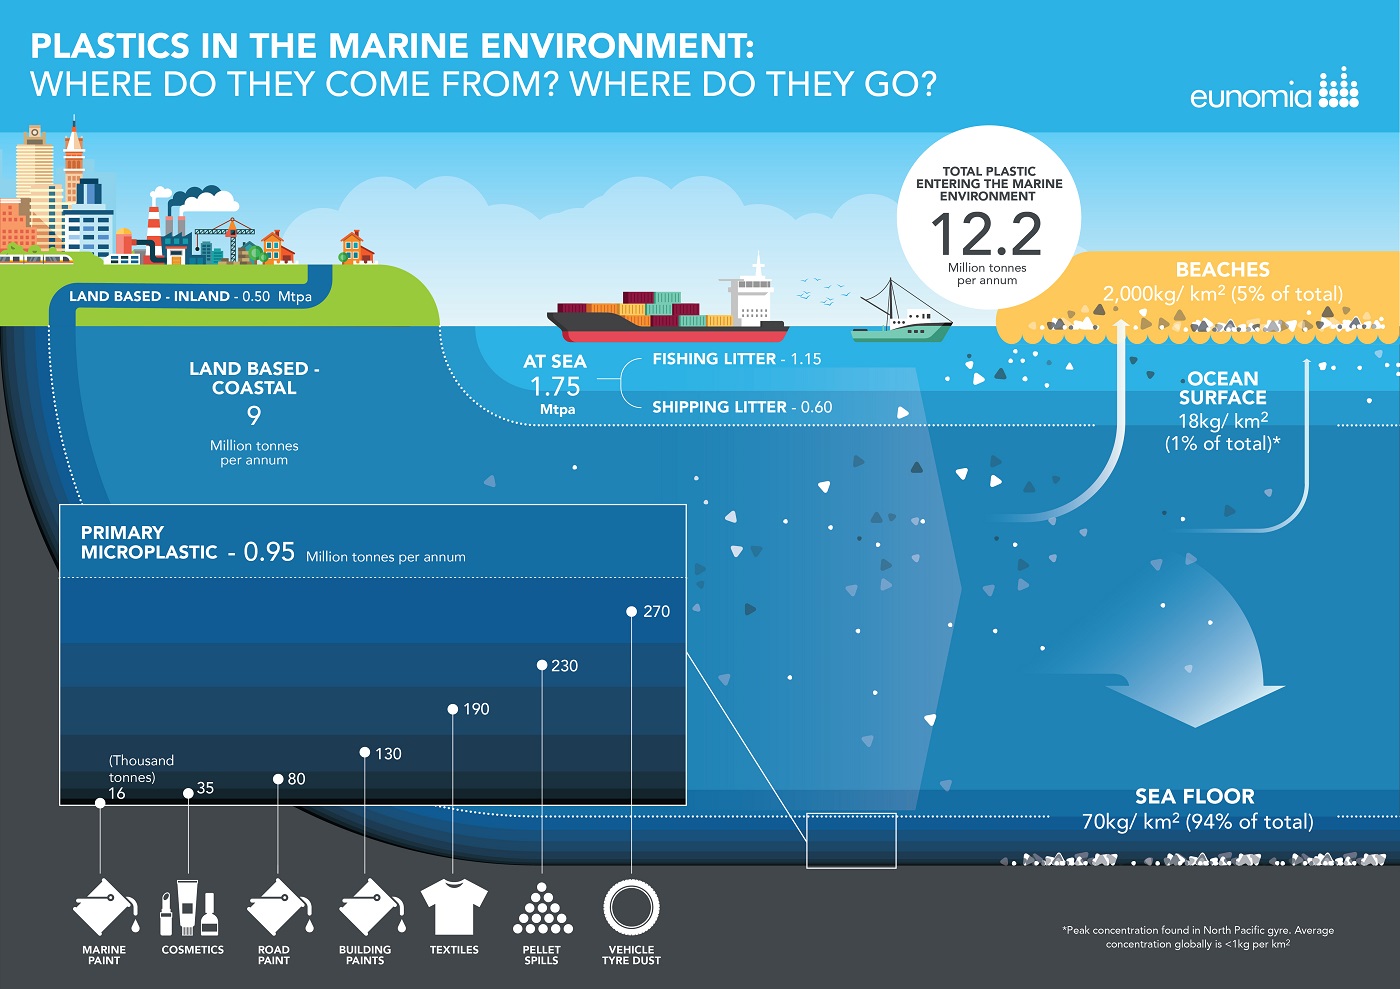 How plastic pollution harms marine life